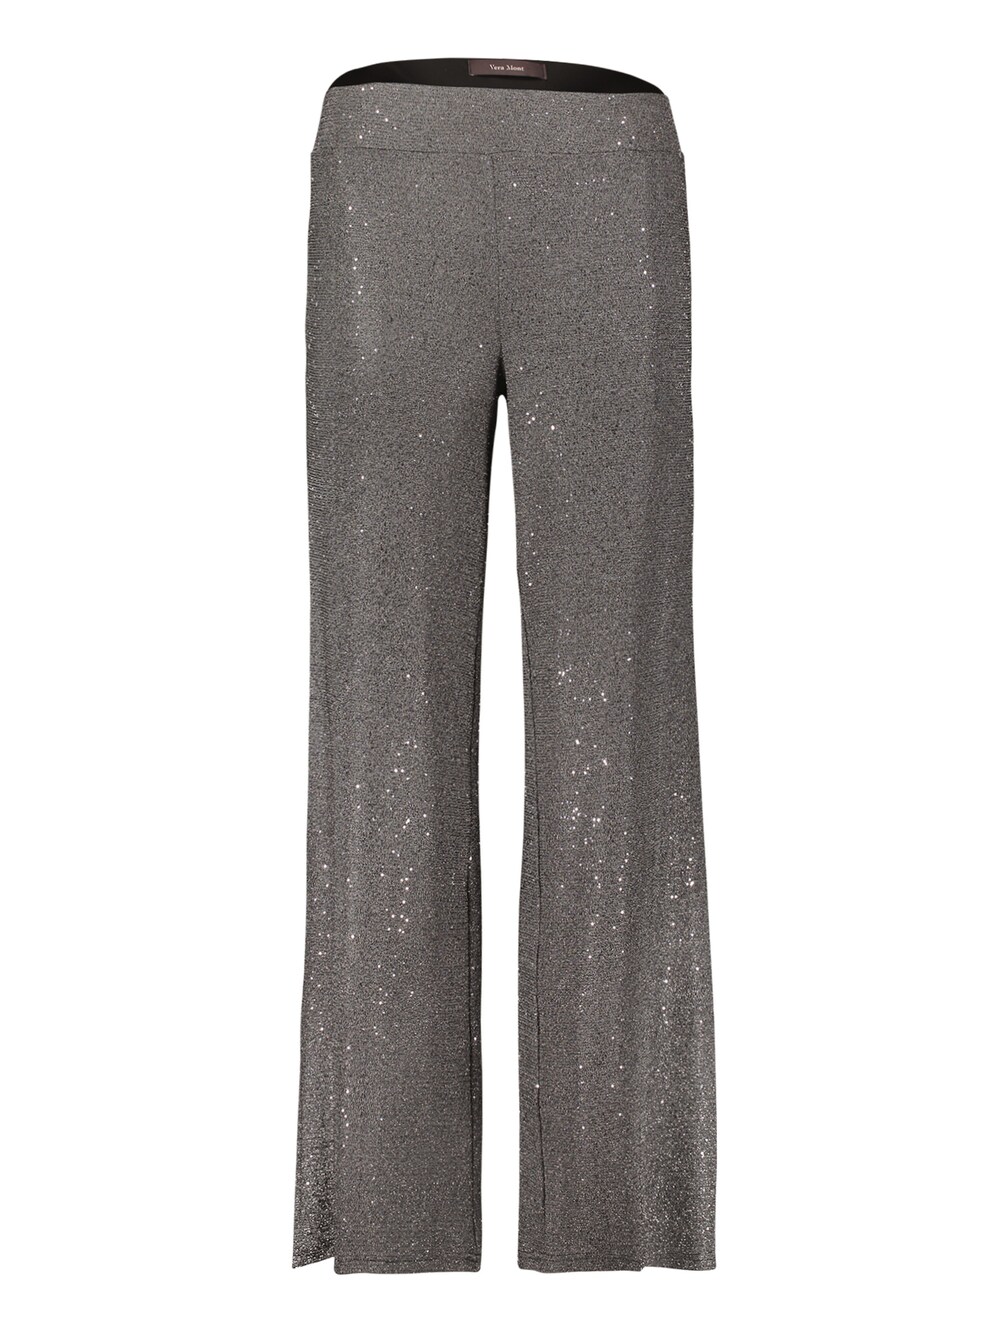 Обычные брюки Vera Mont, серый helena vera топ р 50 цвет серый